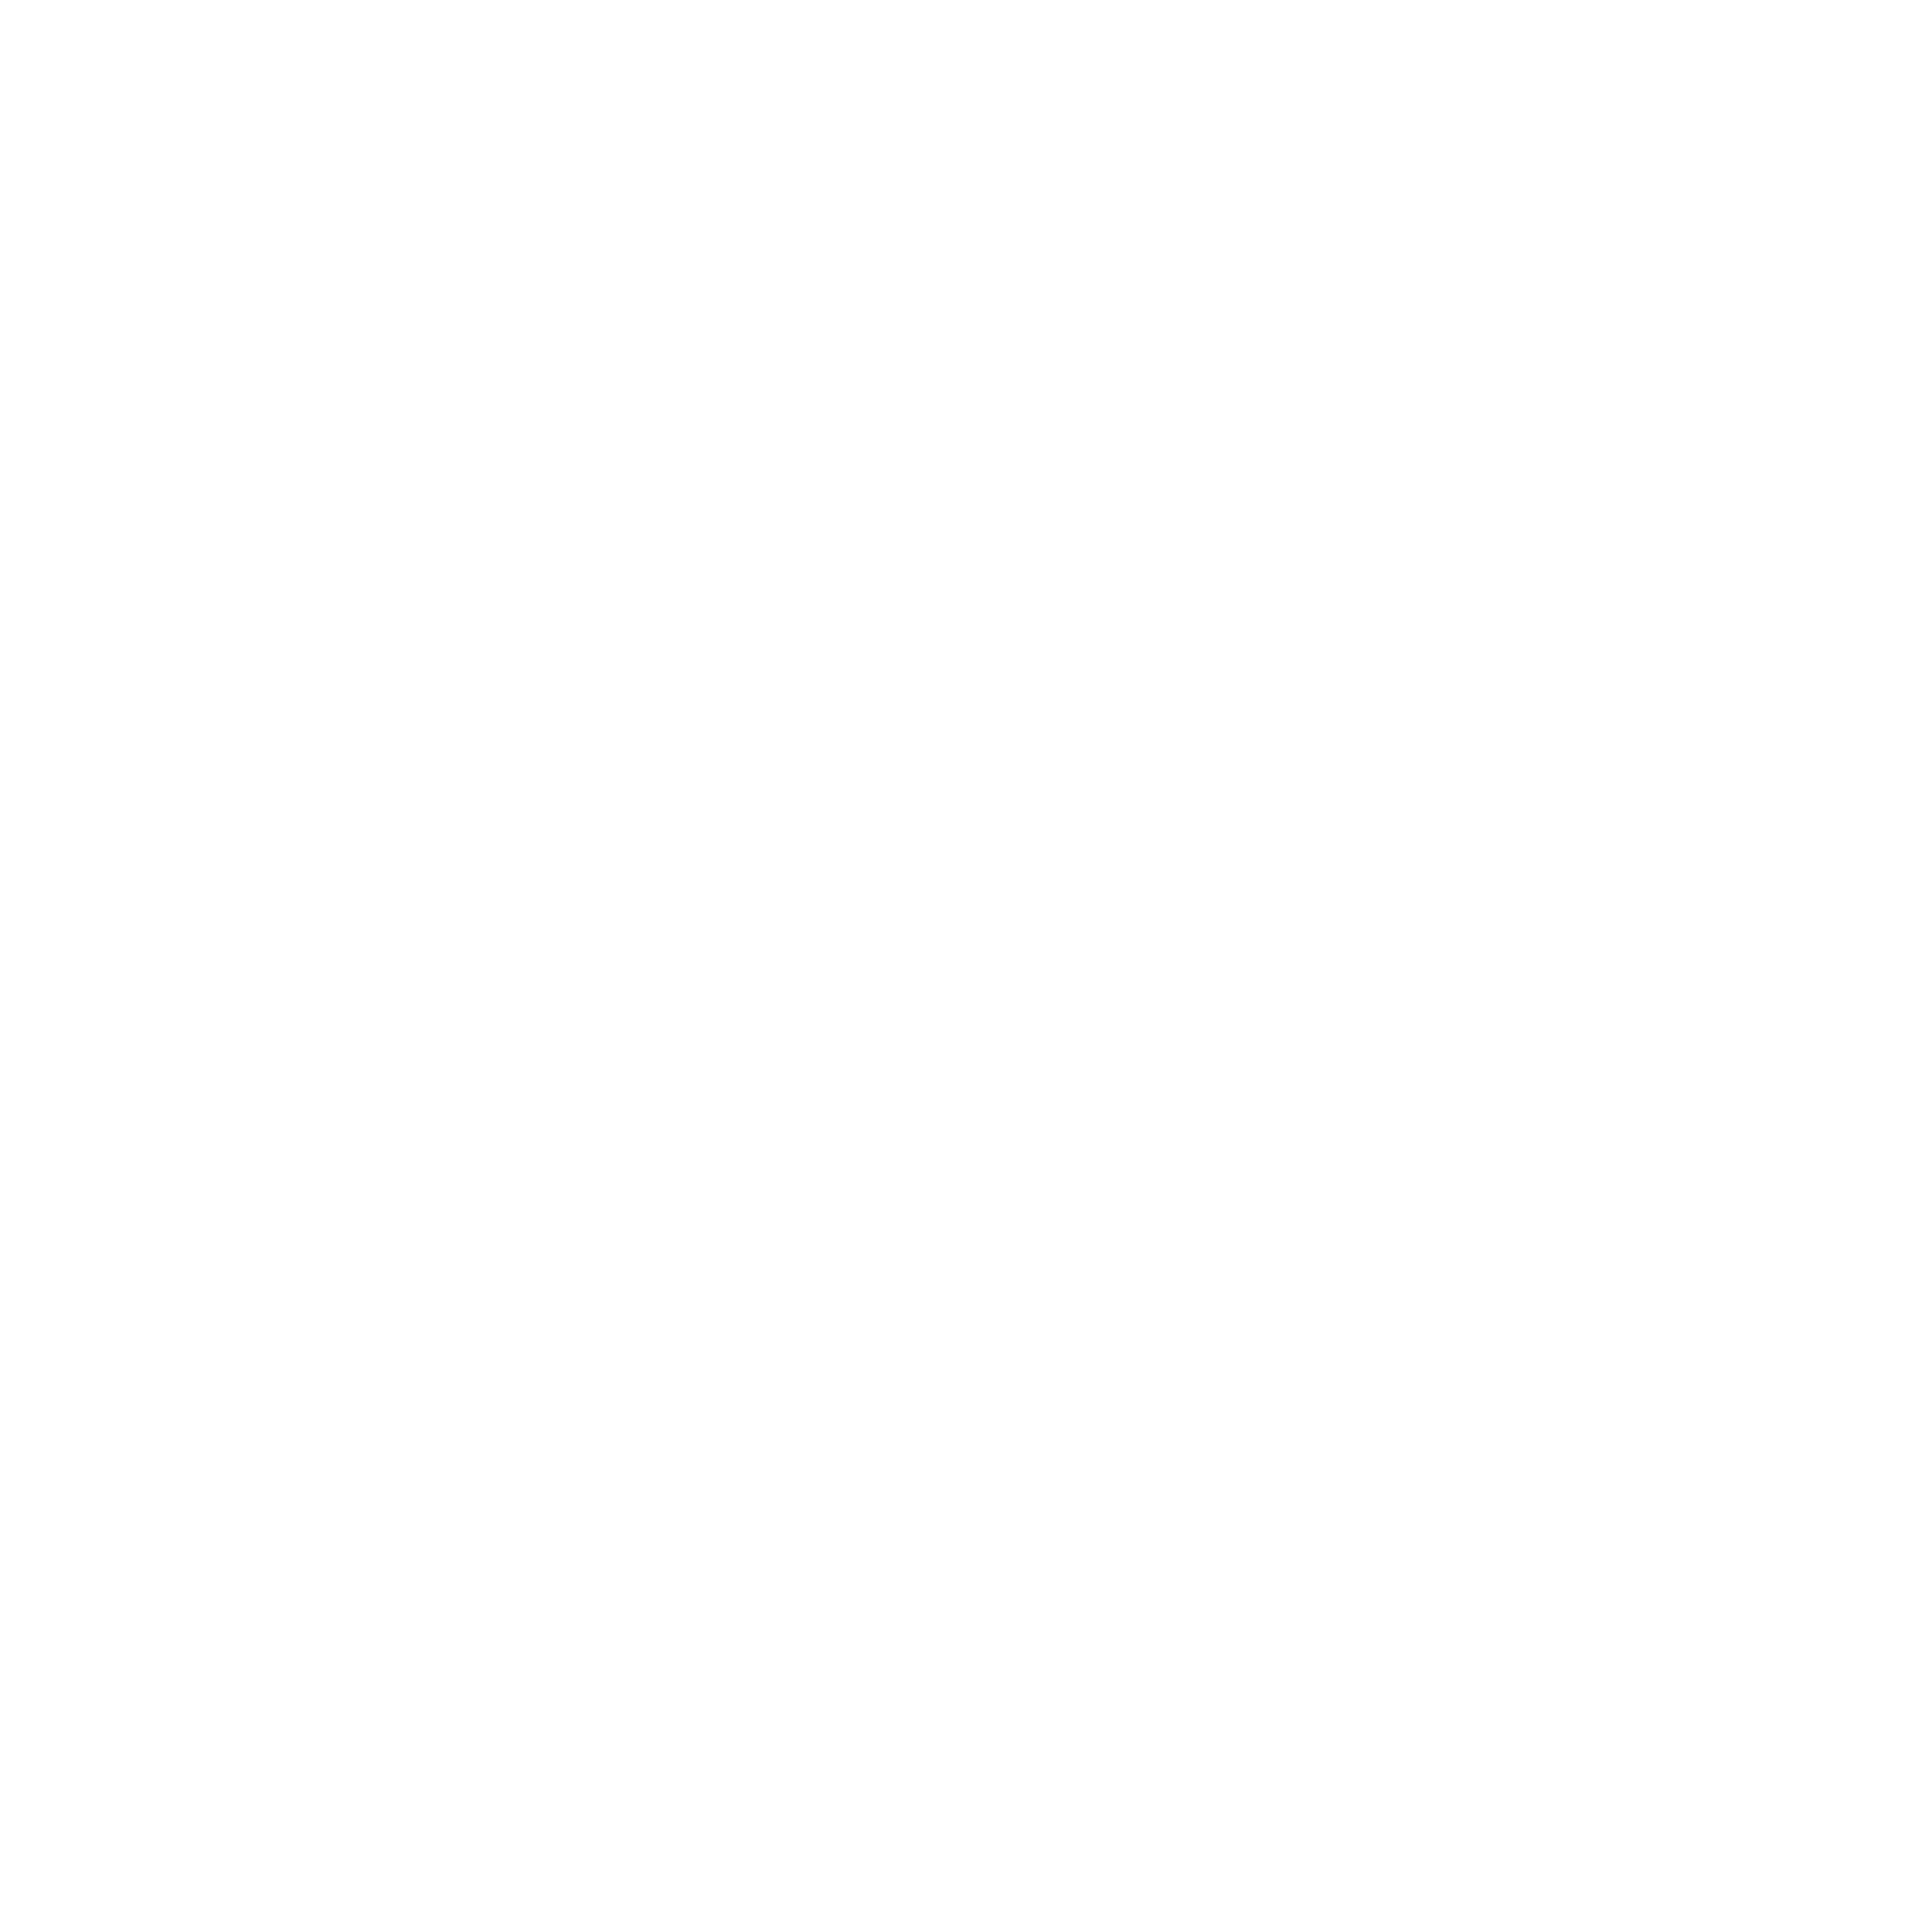 vaultra-logo-1080×1080-01